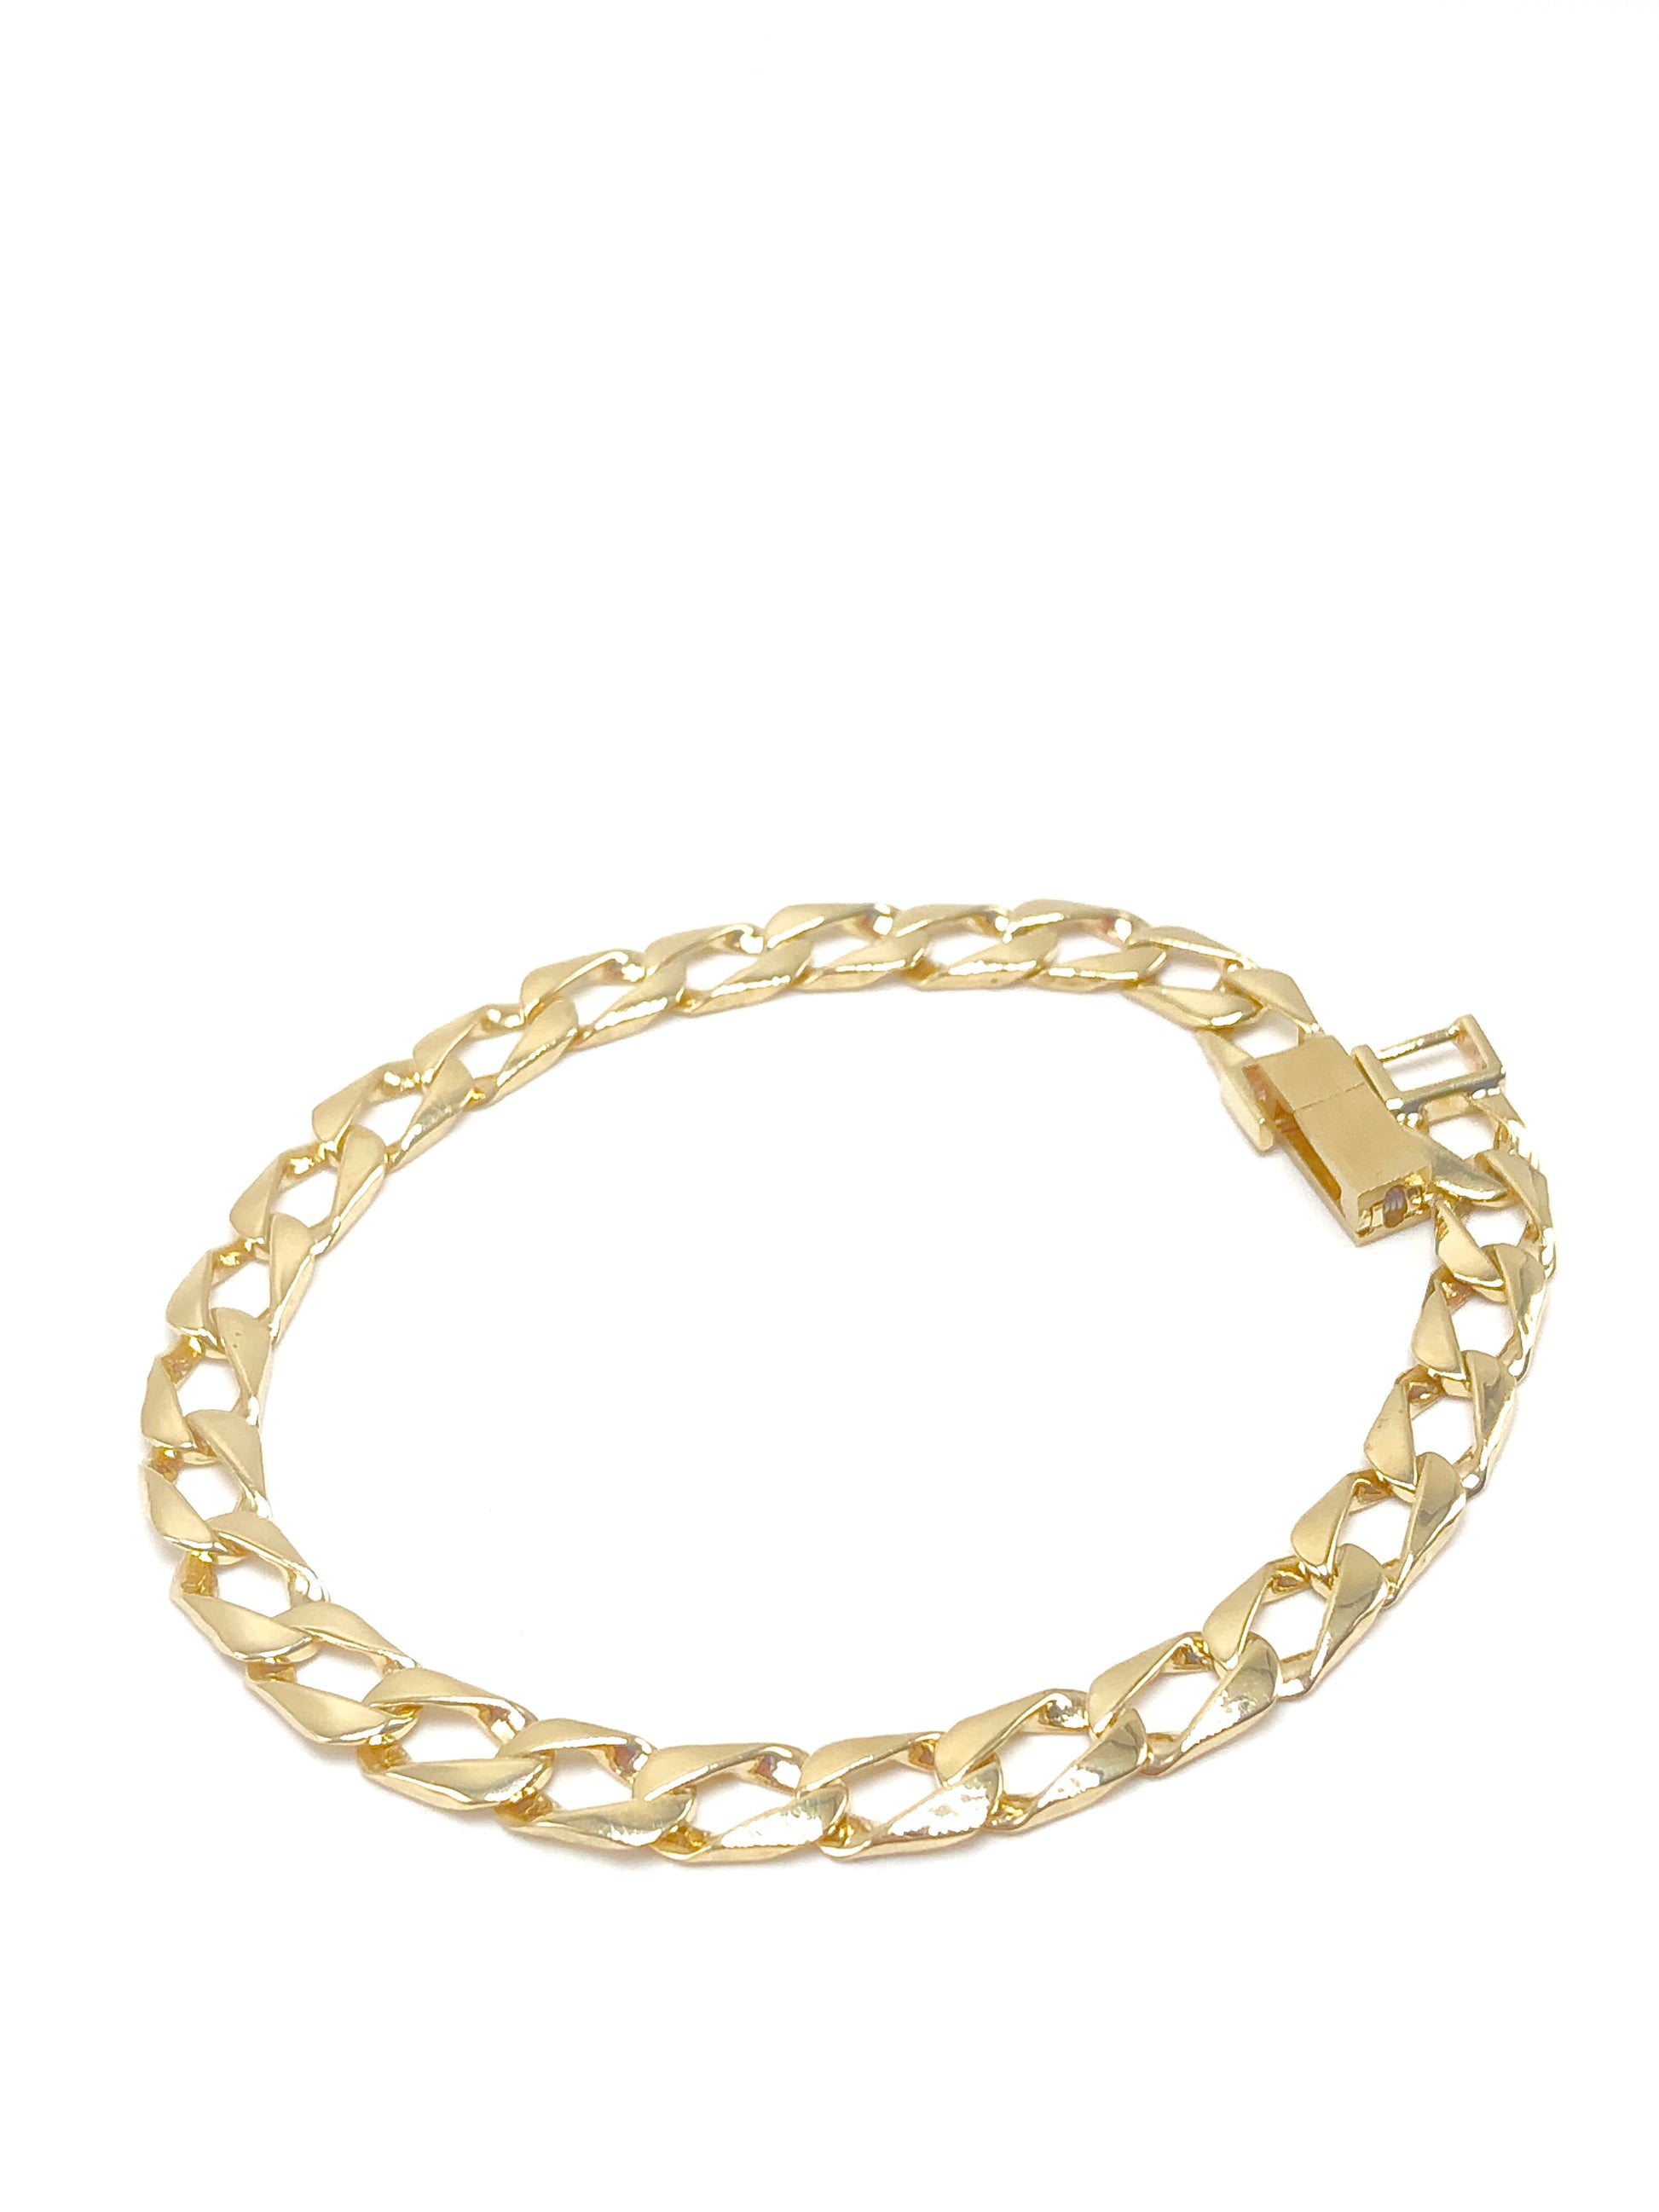 10k yellow gold modern style curb bracelet 